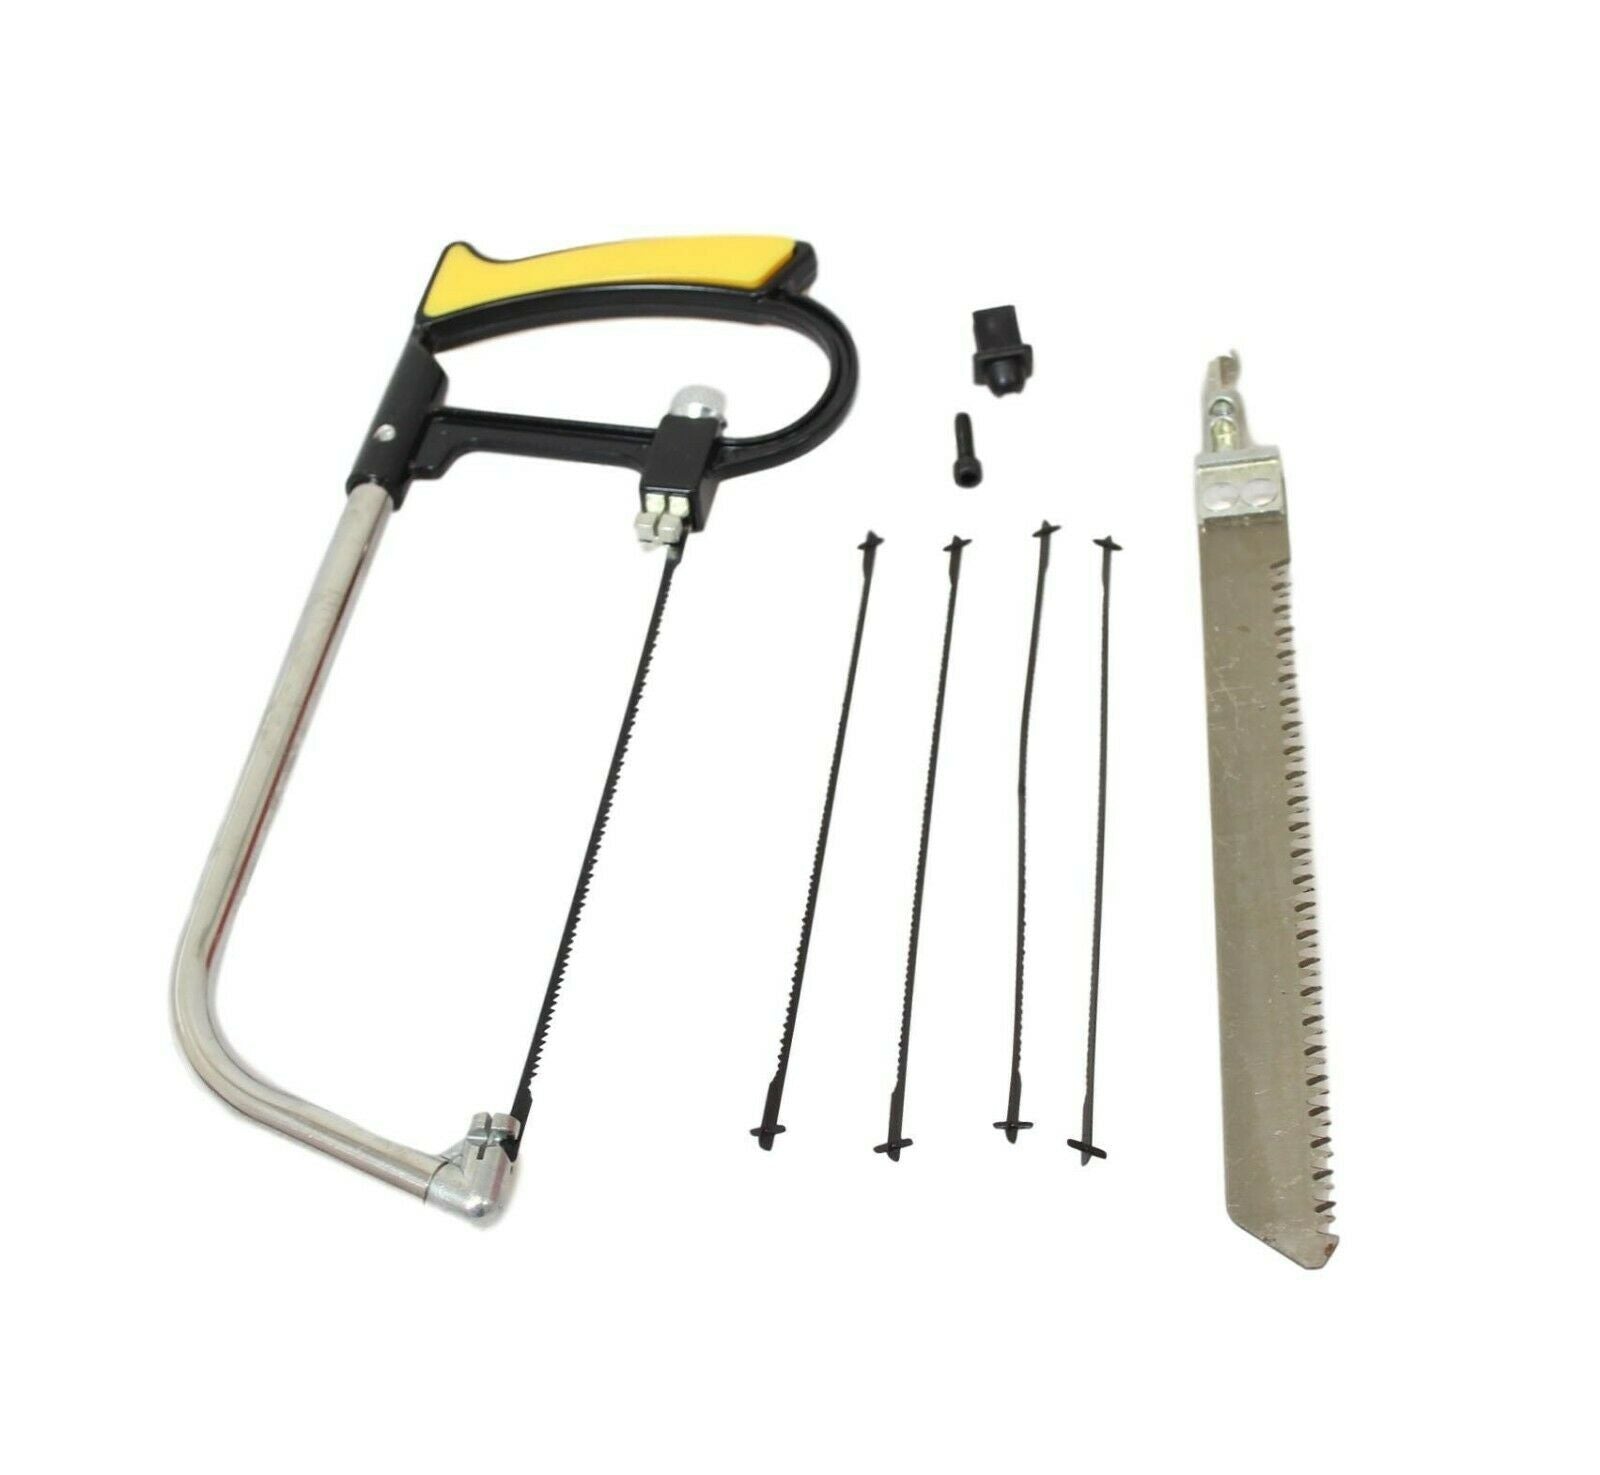 Free shipping- Magic Saw Set 3 Way Blade Cutting Tools DIY Builder Starter Kit Assorted Blades